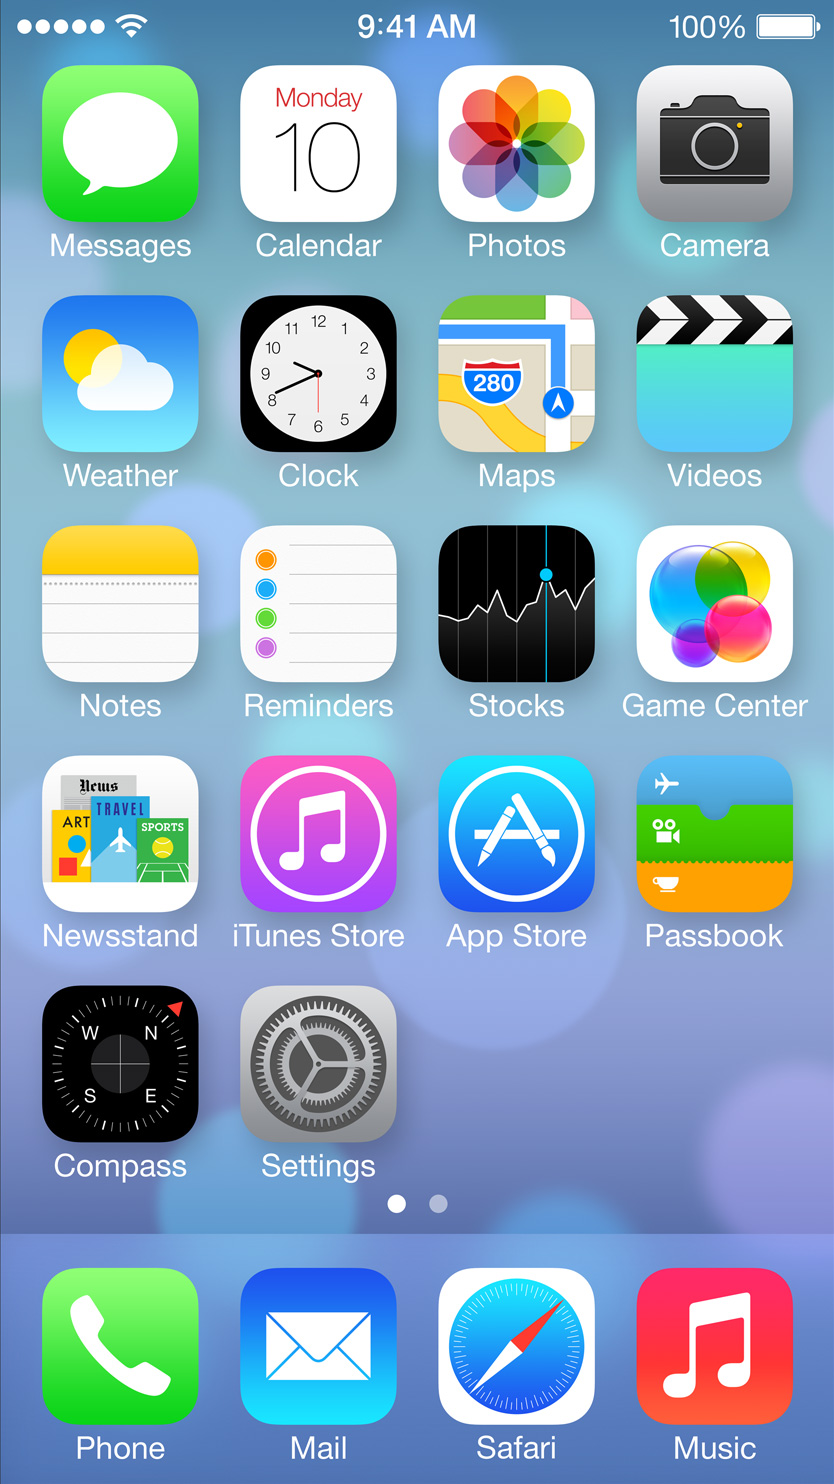 iPhone Home Screen iOS 7